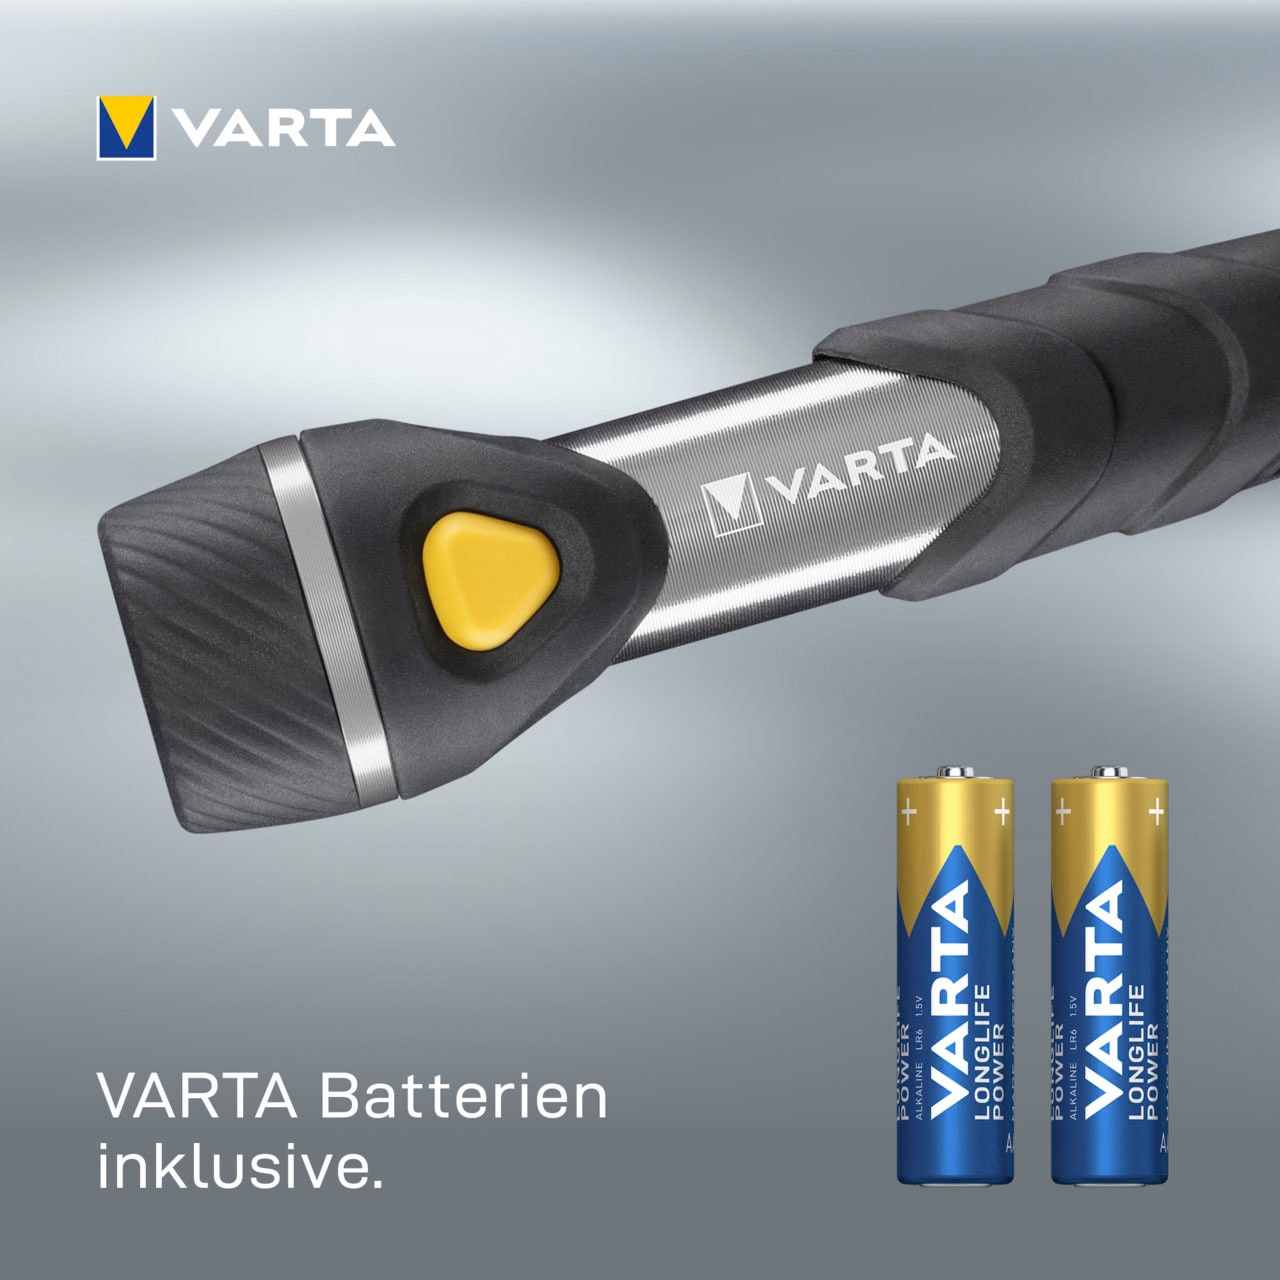 VARTA Handleuchte Multi jetzt 9 F20 Light Taschenlampe Day mit LED »VARTA %Sale LEDs« im